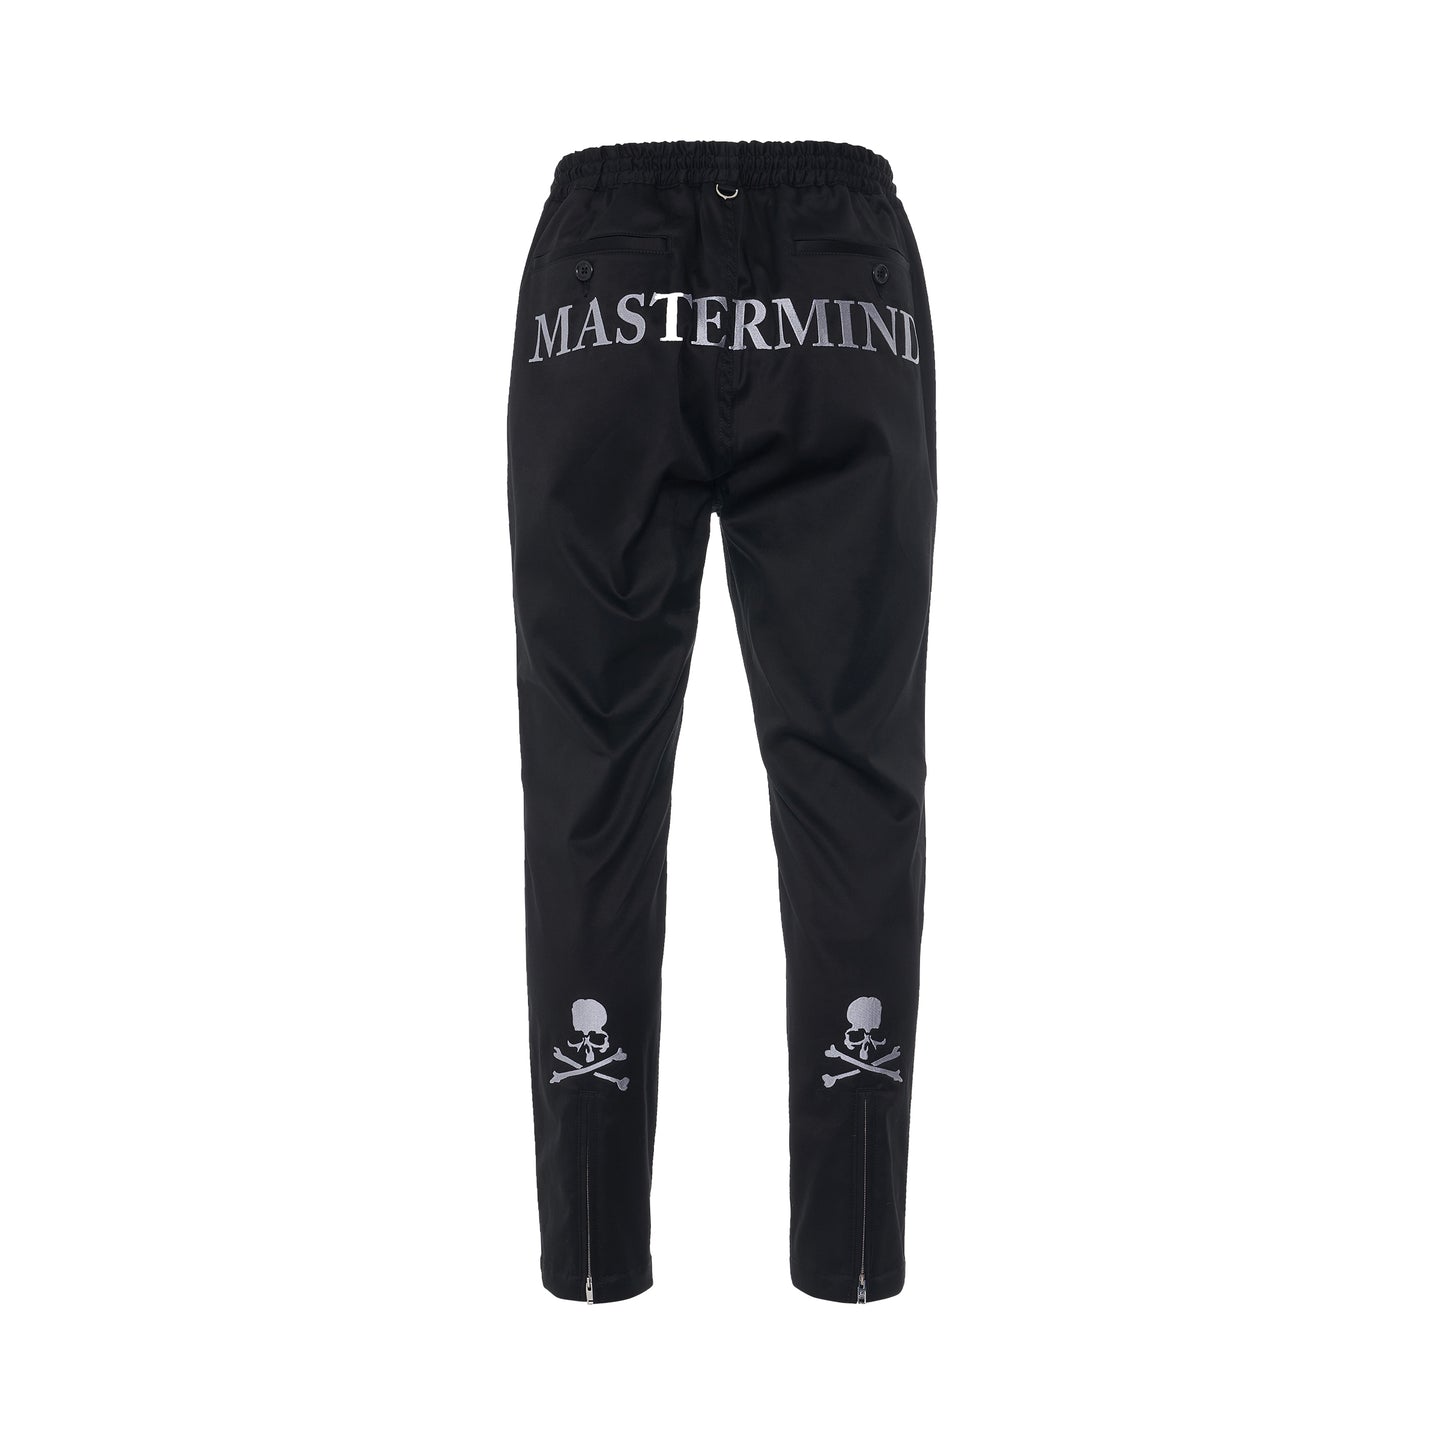 Masterseed Sideline Pants in Black/Sand